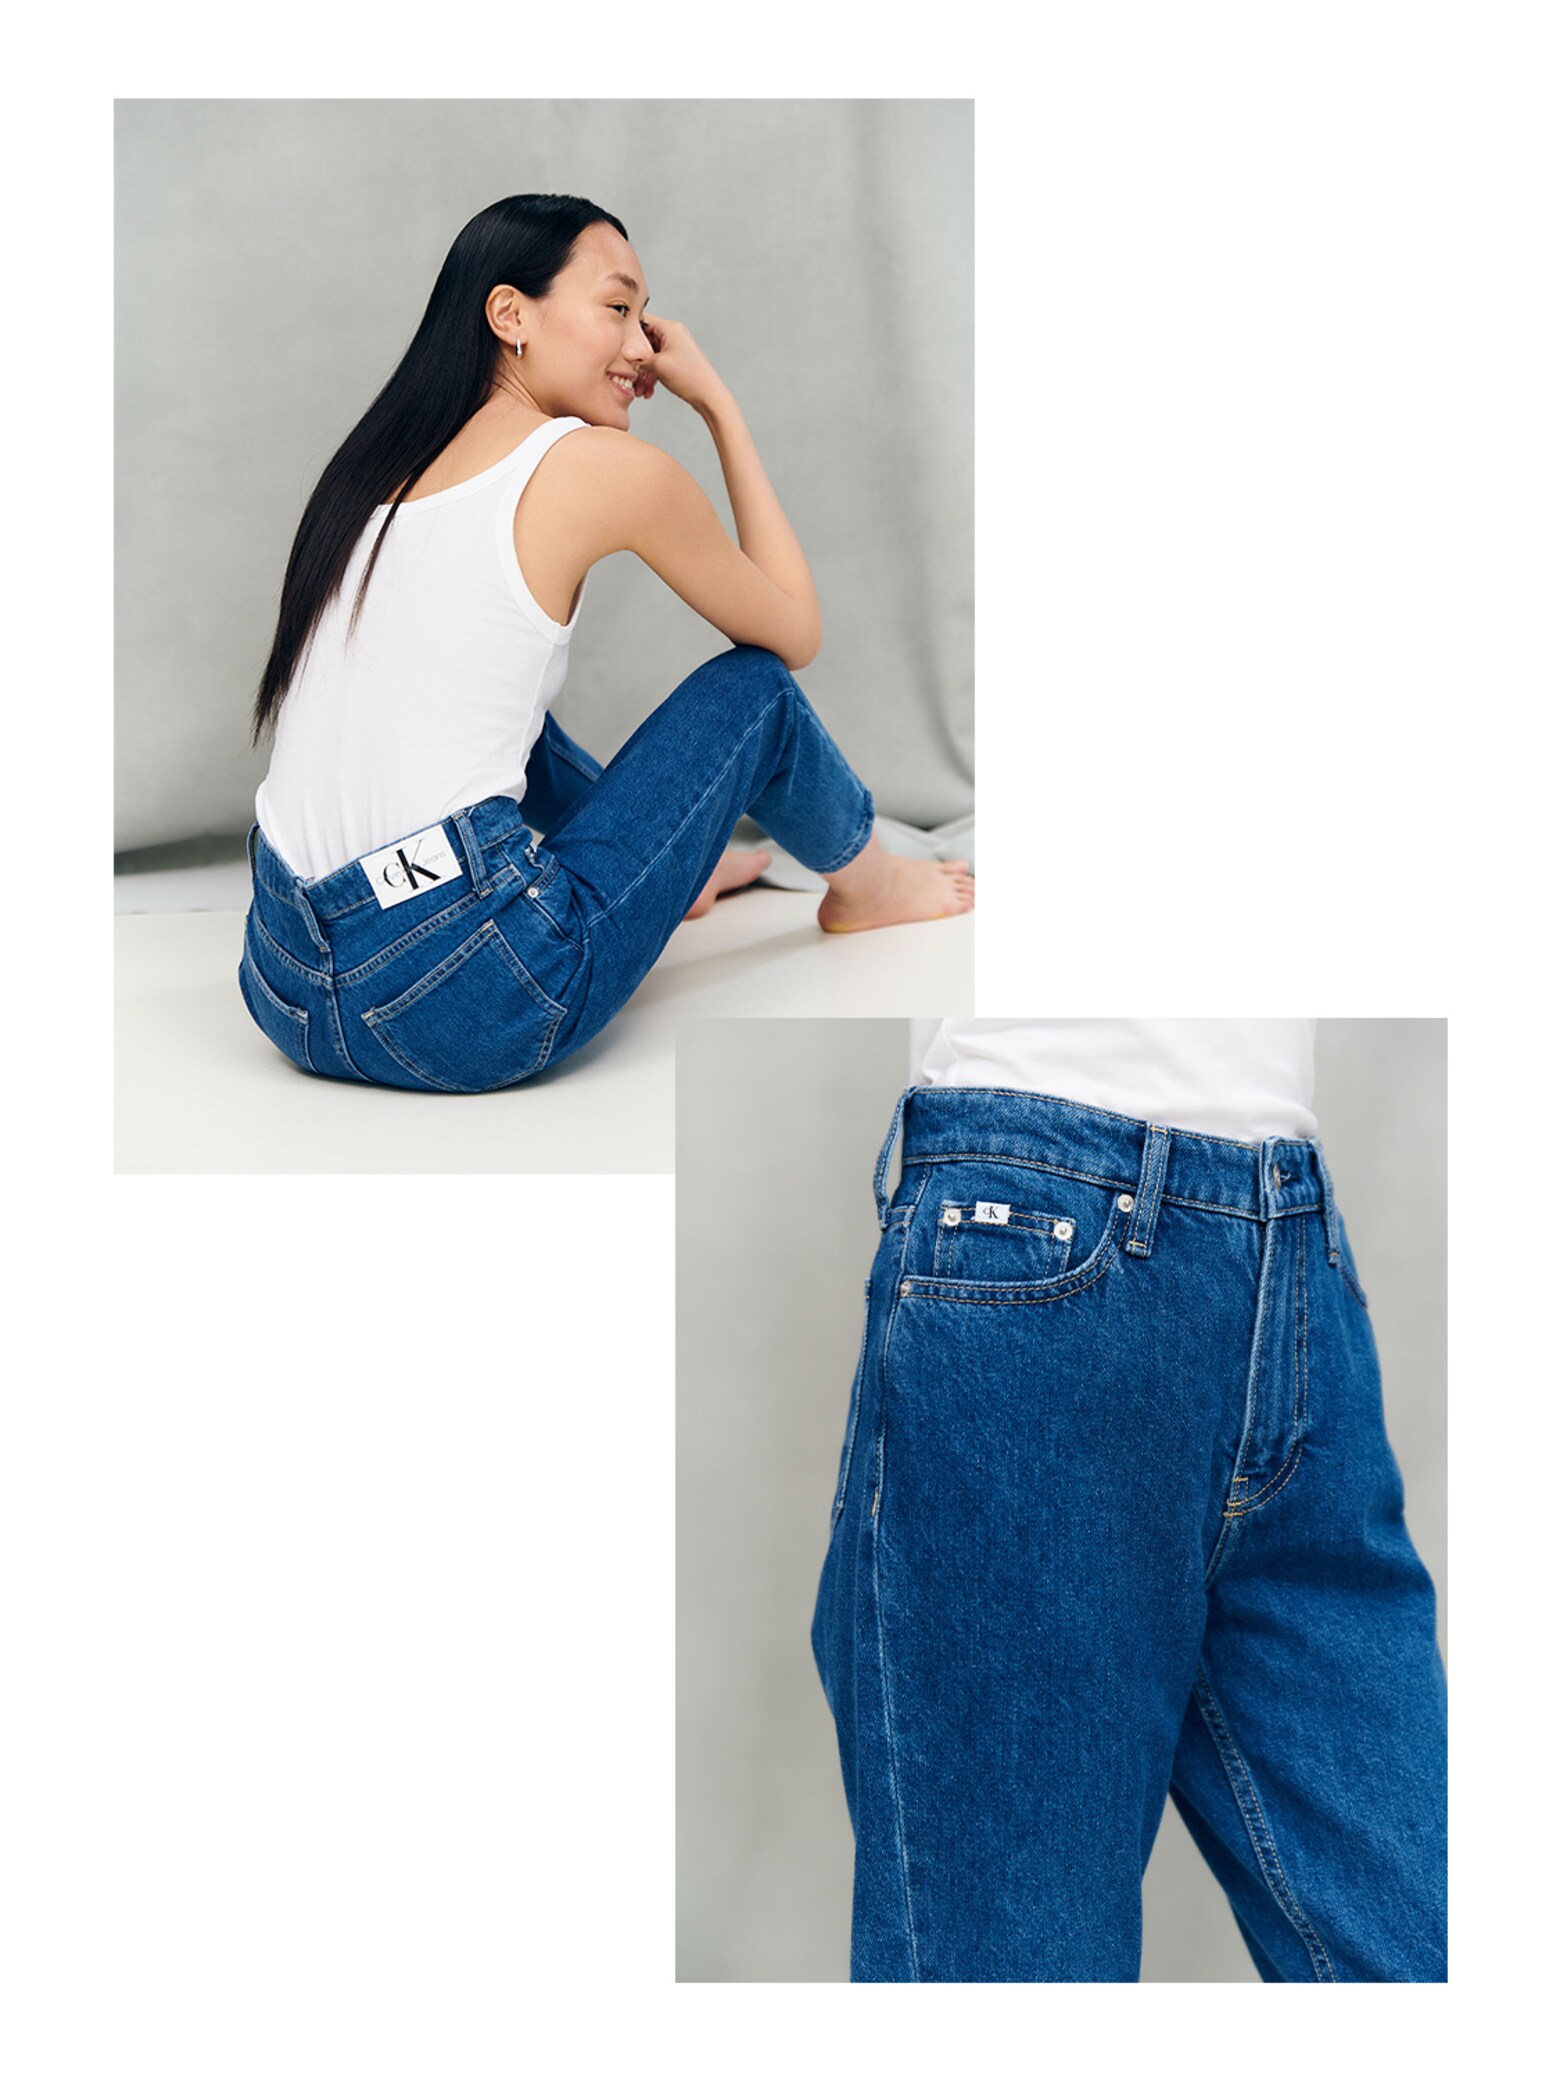 Abbinare con comfort Outfit casual in jeans